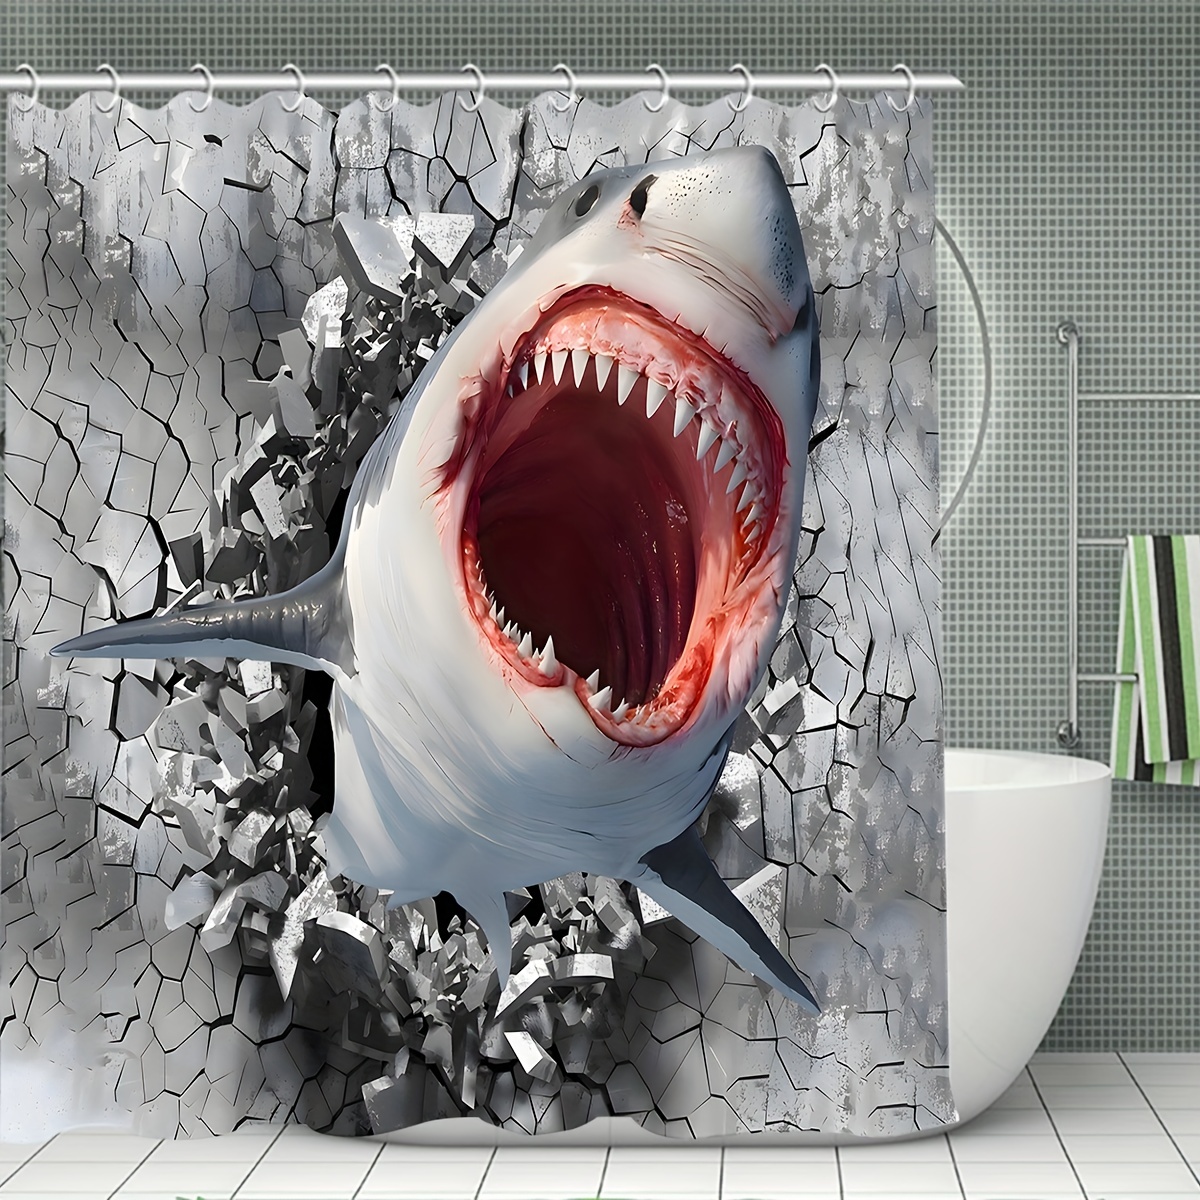 Shark Ocean Jaws Fabric Shower Curtain Waterproof Sea Bathroom